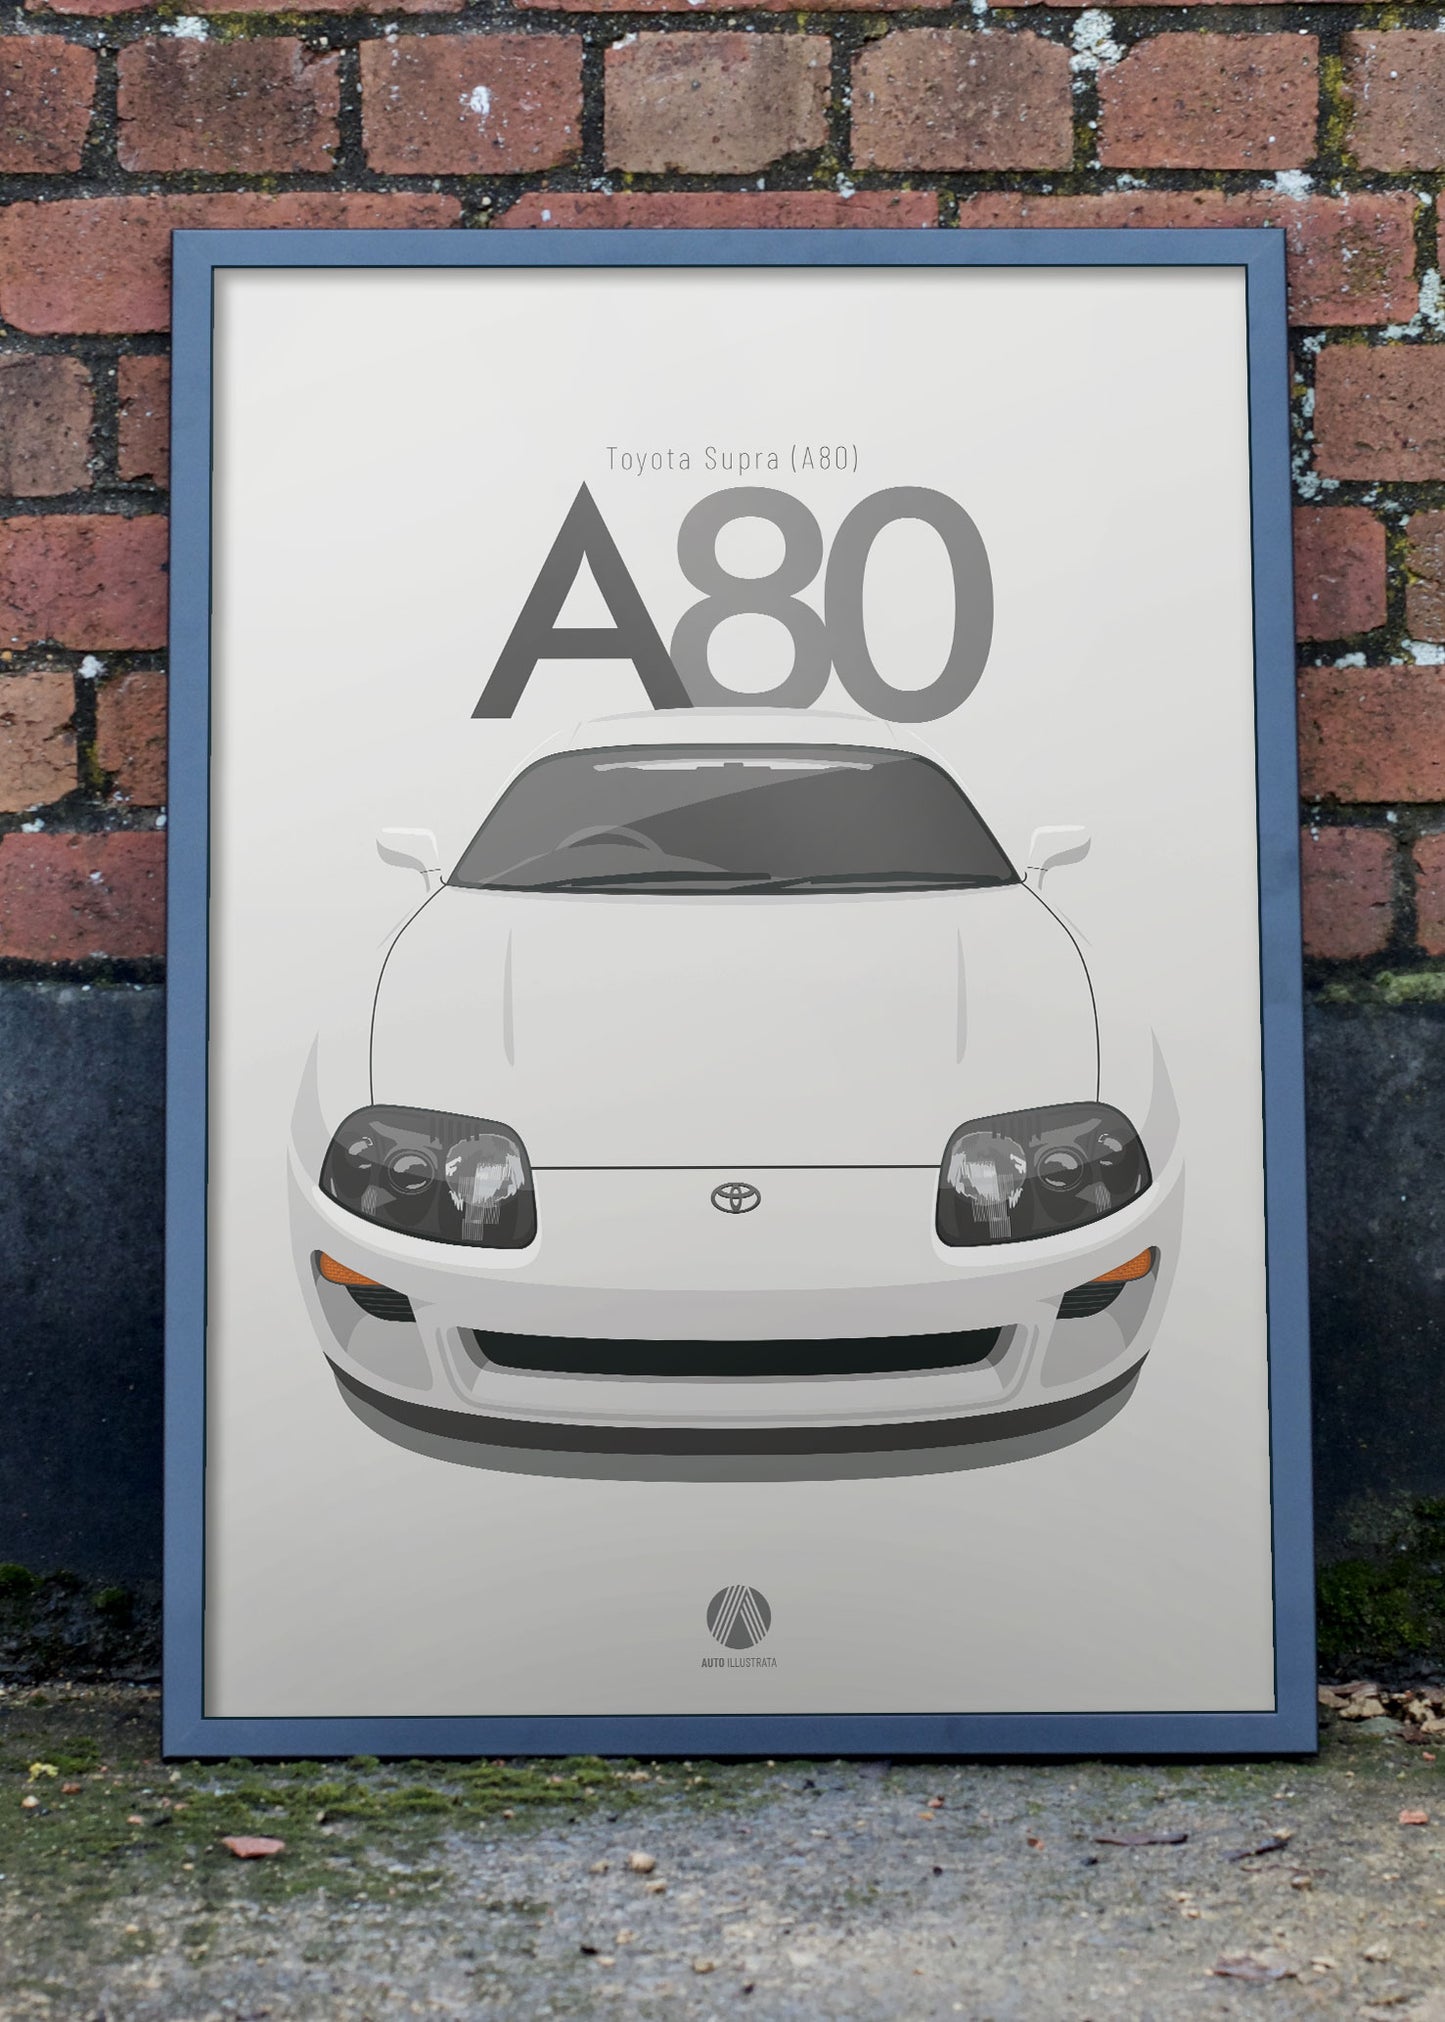 1993 Toyota Supra (A80) - White - poster print